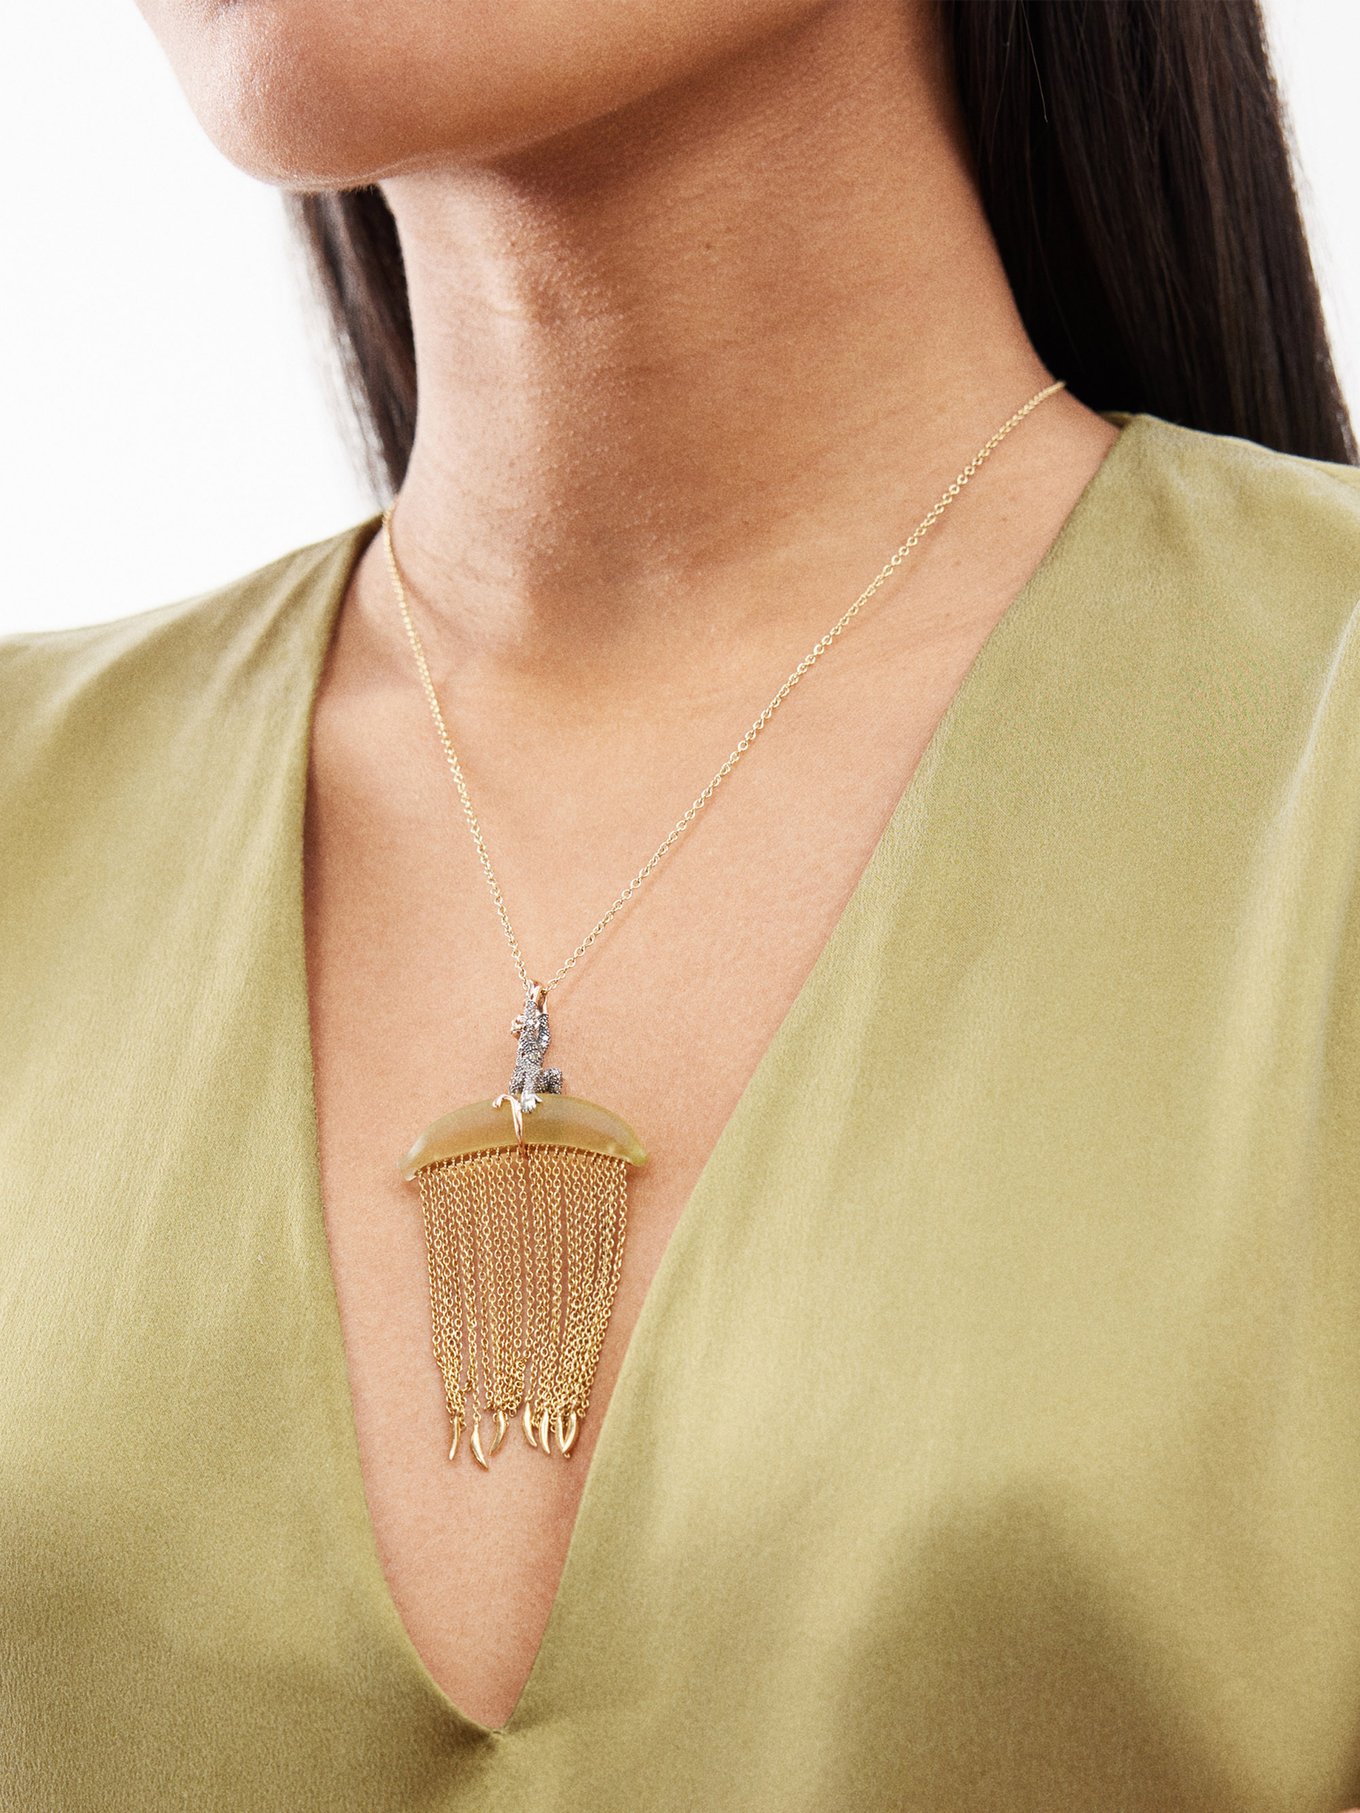 Bibi Crystal Necklace: Healing Crystal Jewelry